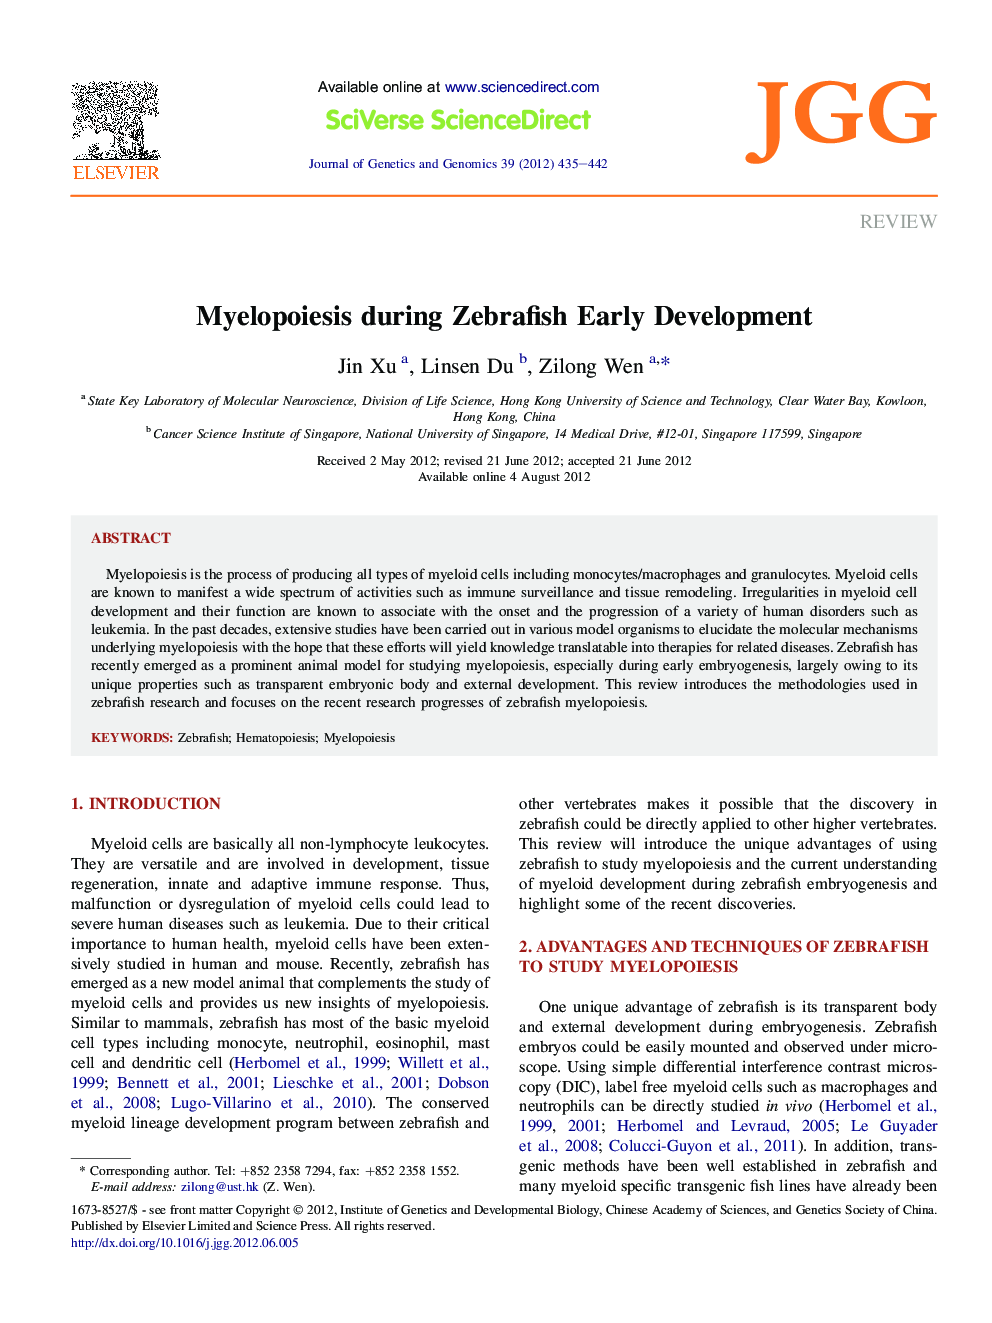 Myelopoiesis during Zebrafish Early Development